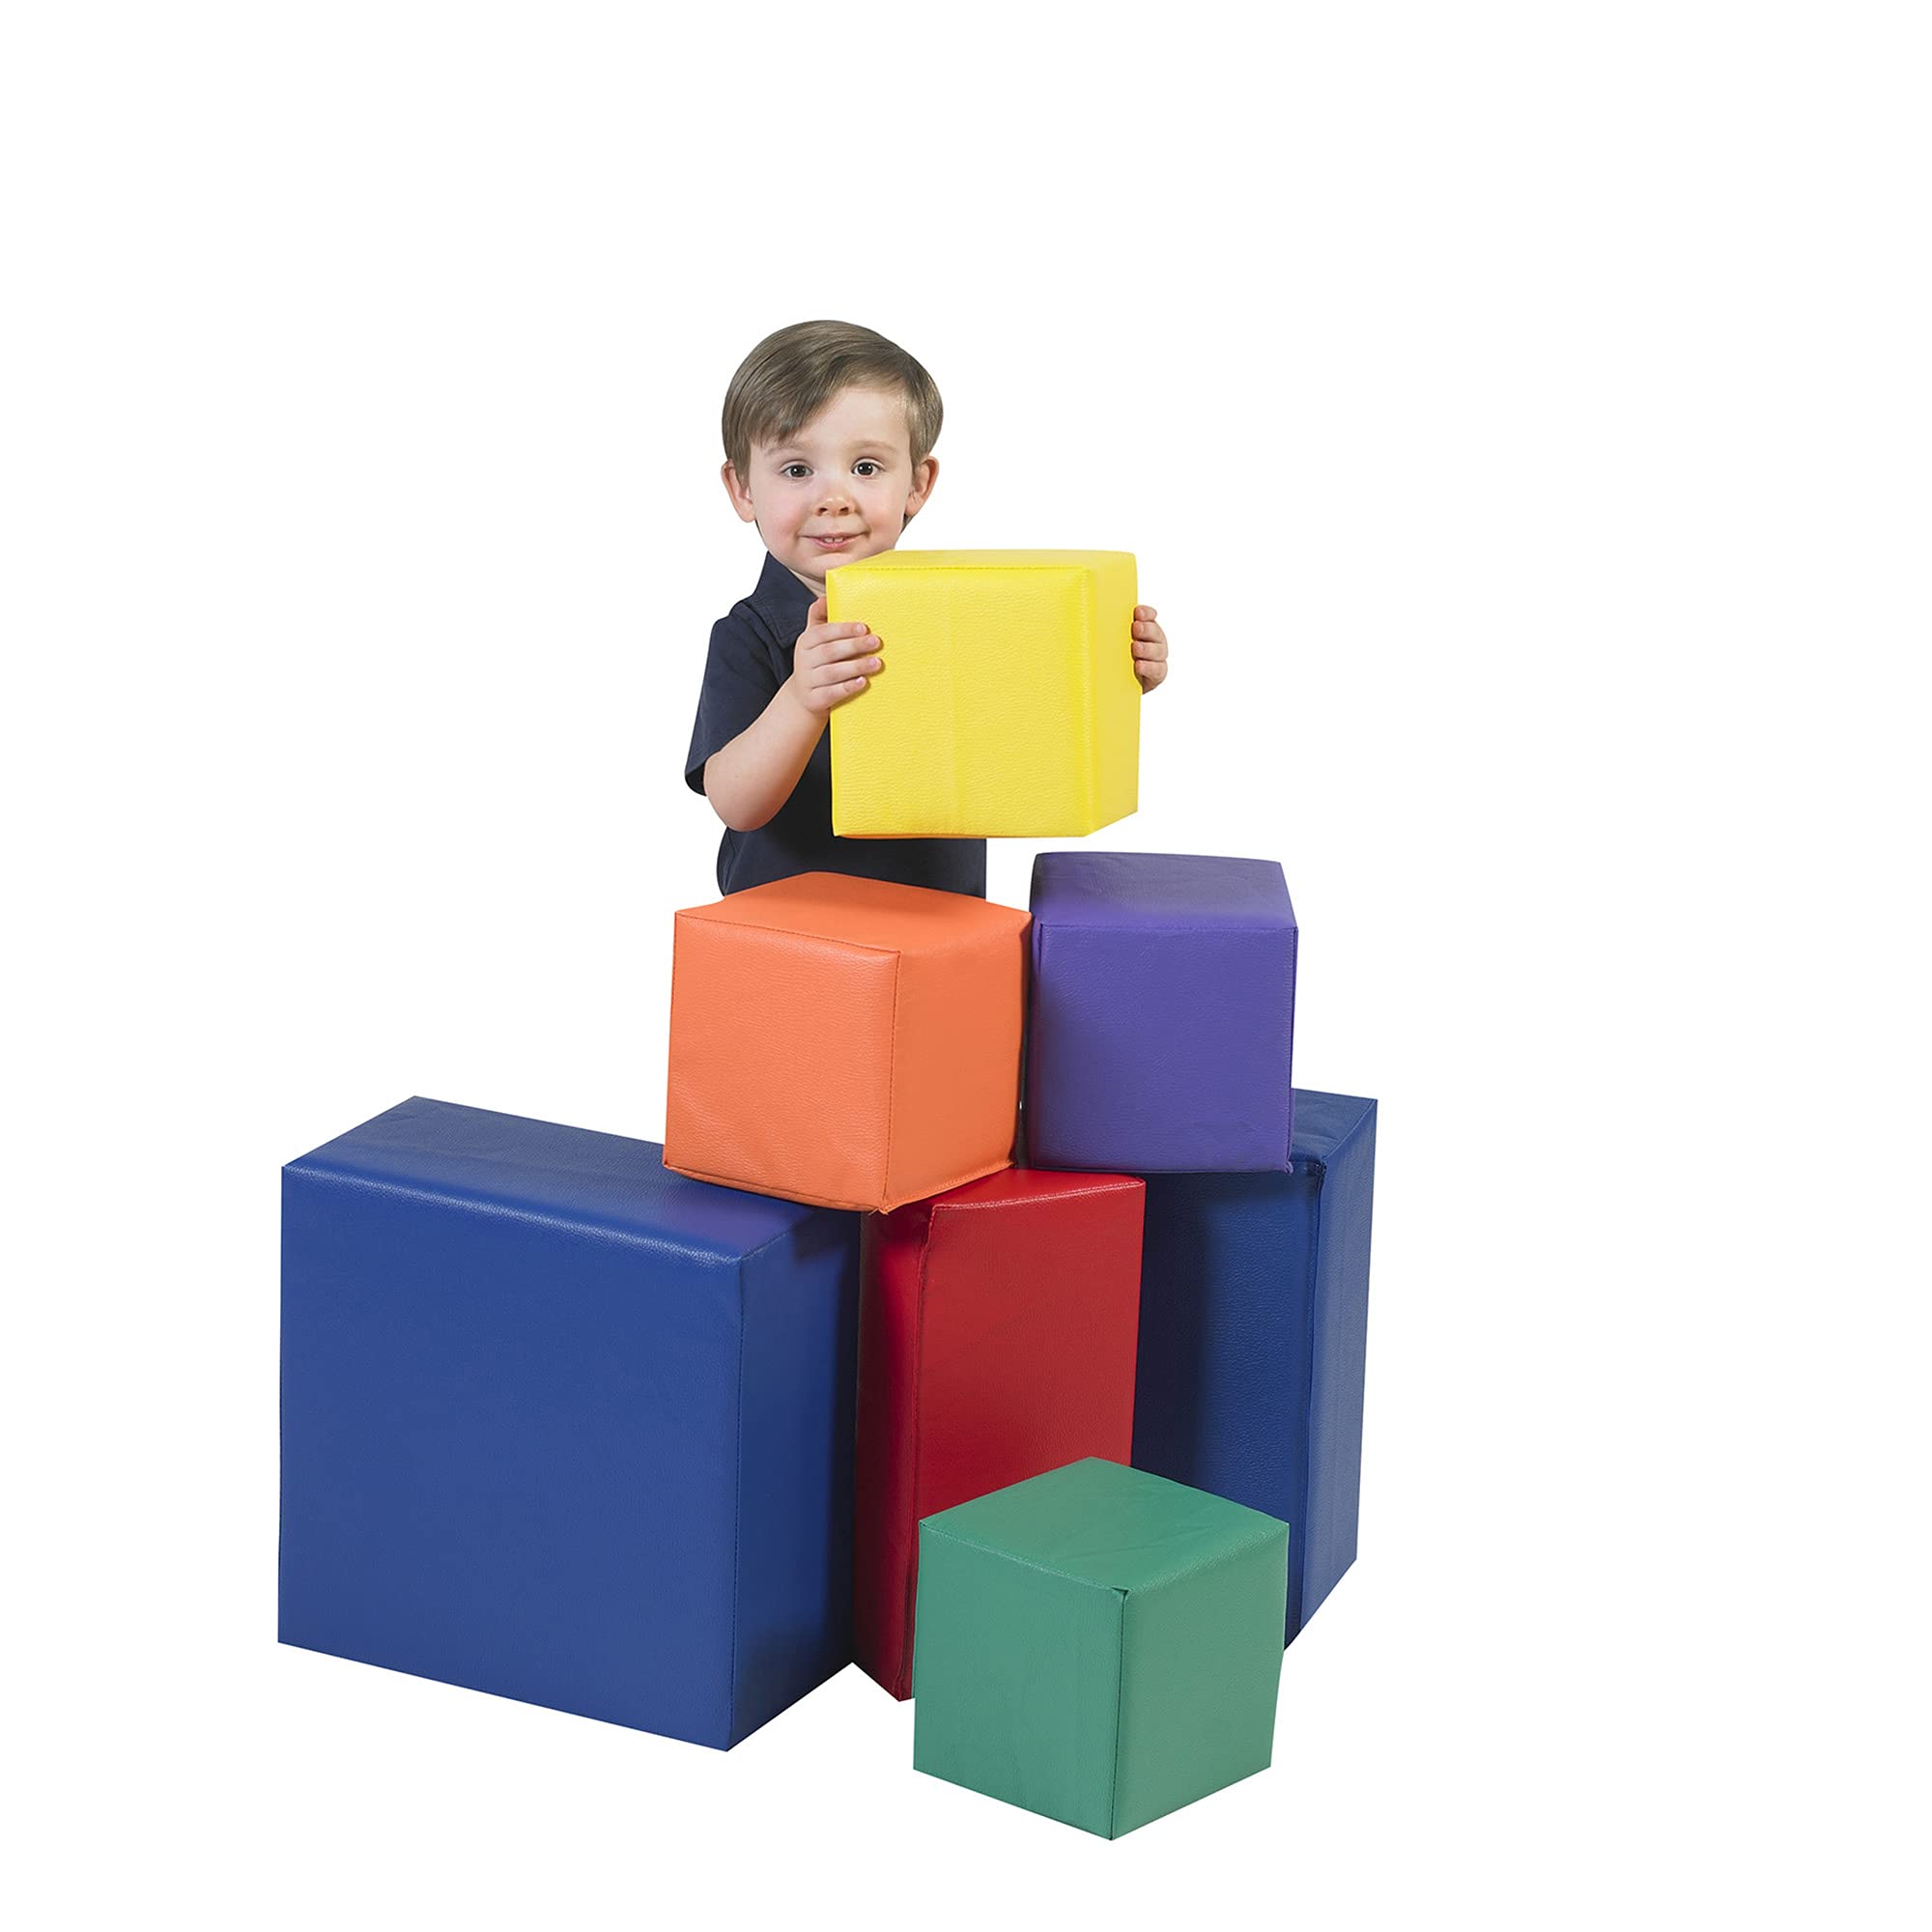 Children's Factory Sturdiblock Set, CF321-530, Large Foam Blocks for Toddlers, Big Building Blocks, Daycare or Playroom Soft Play Equipment, Set-7